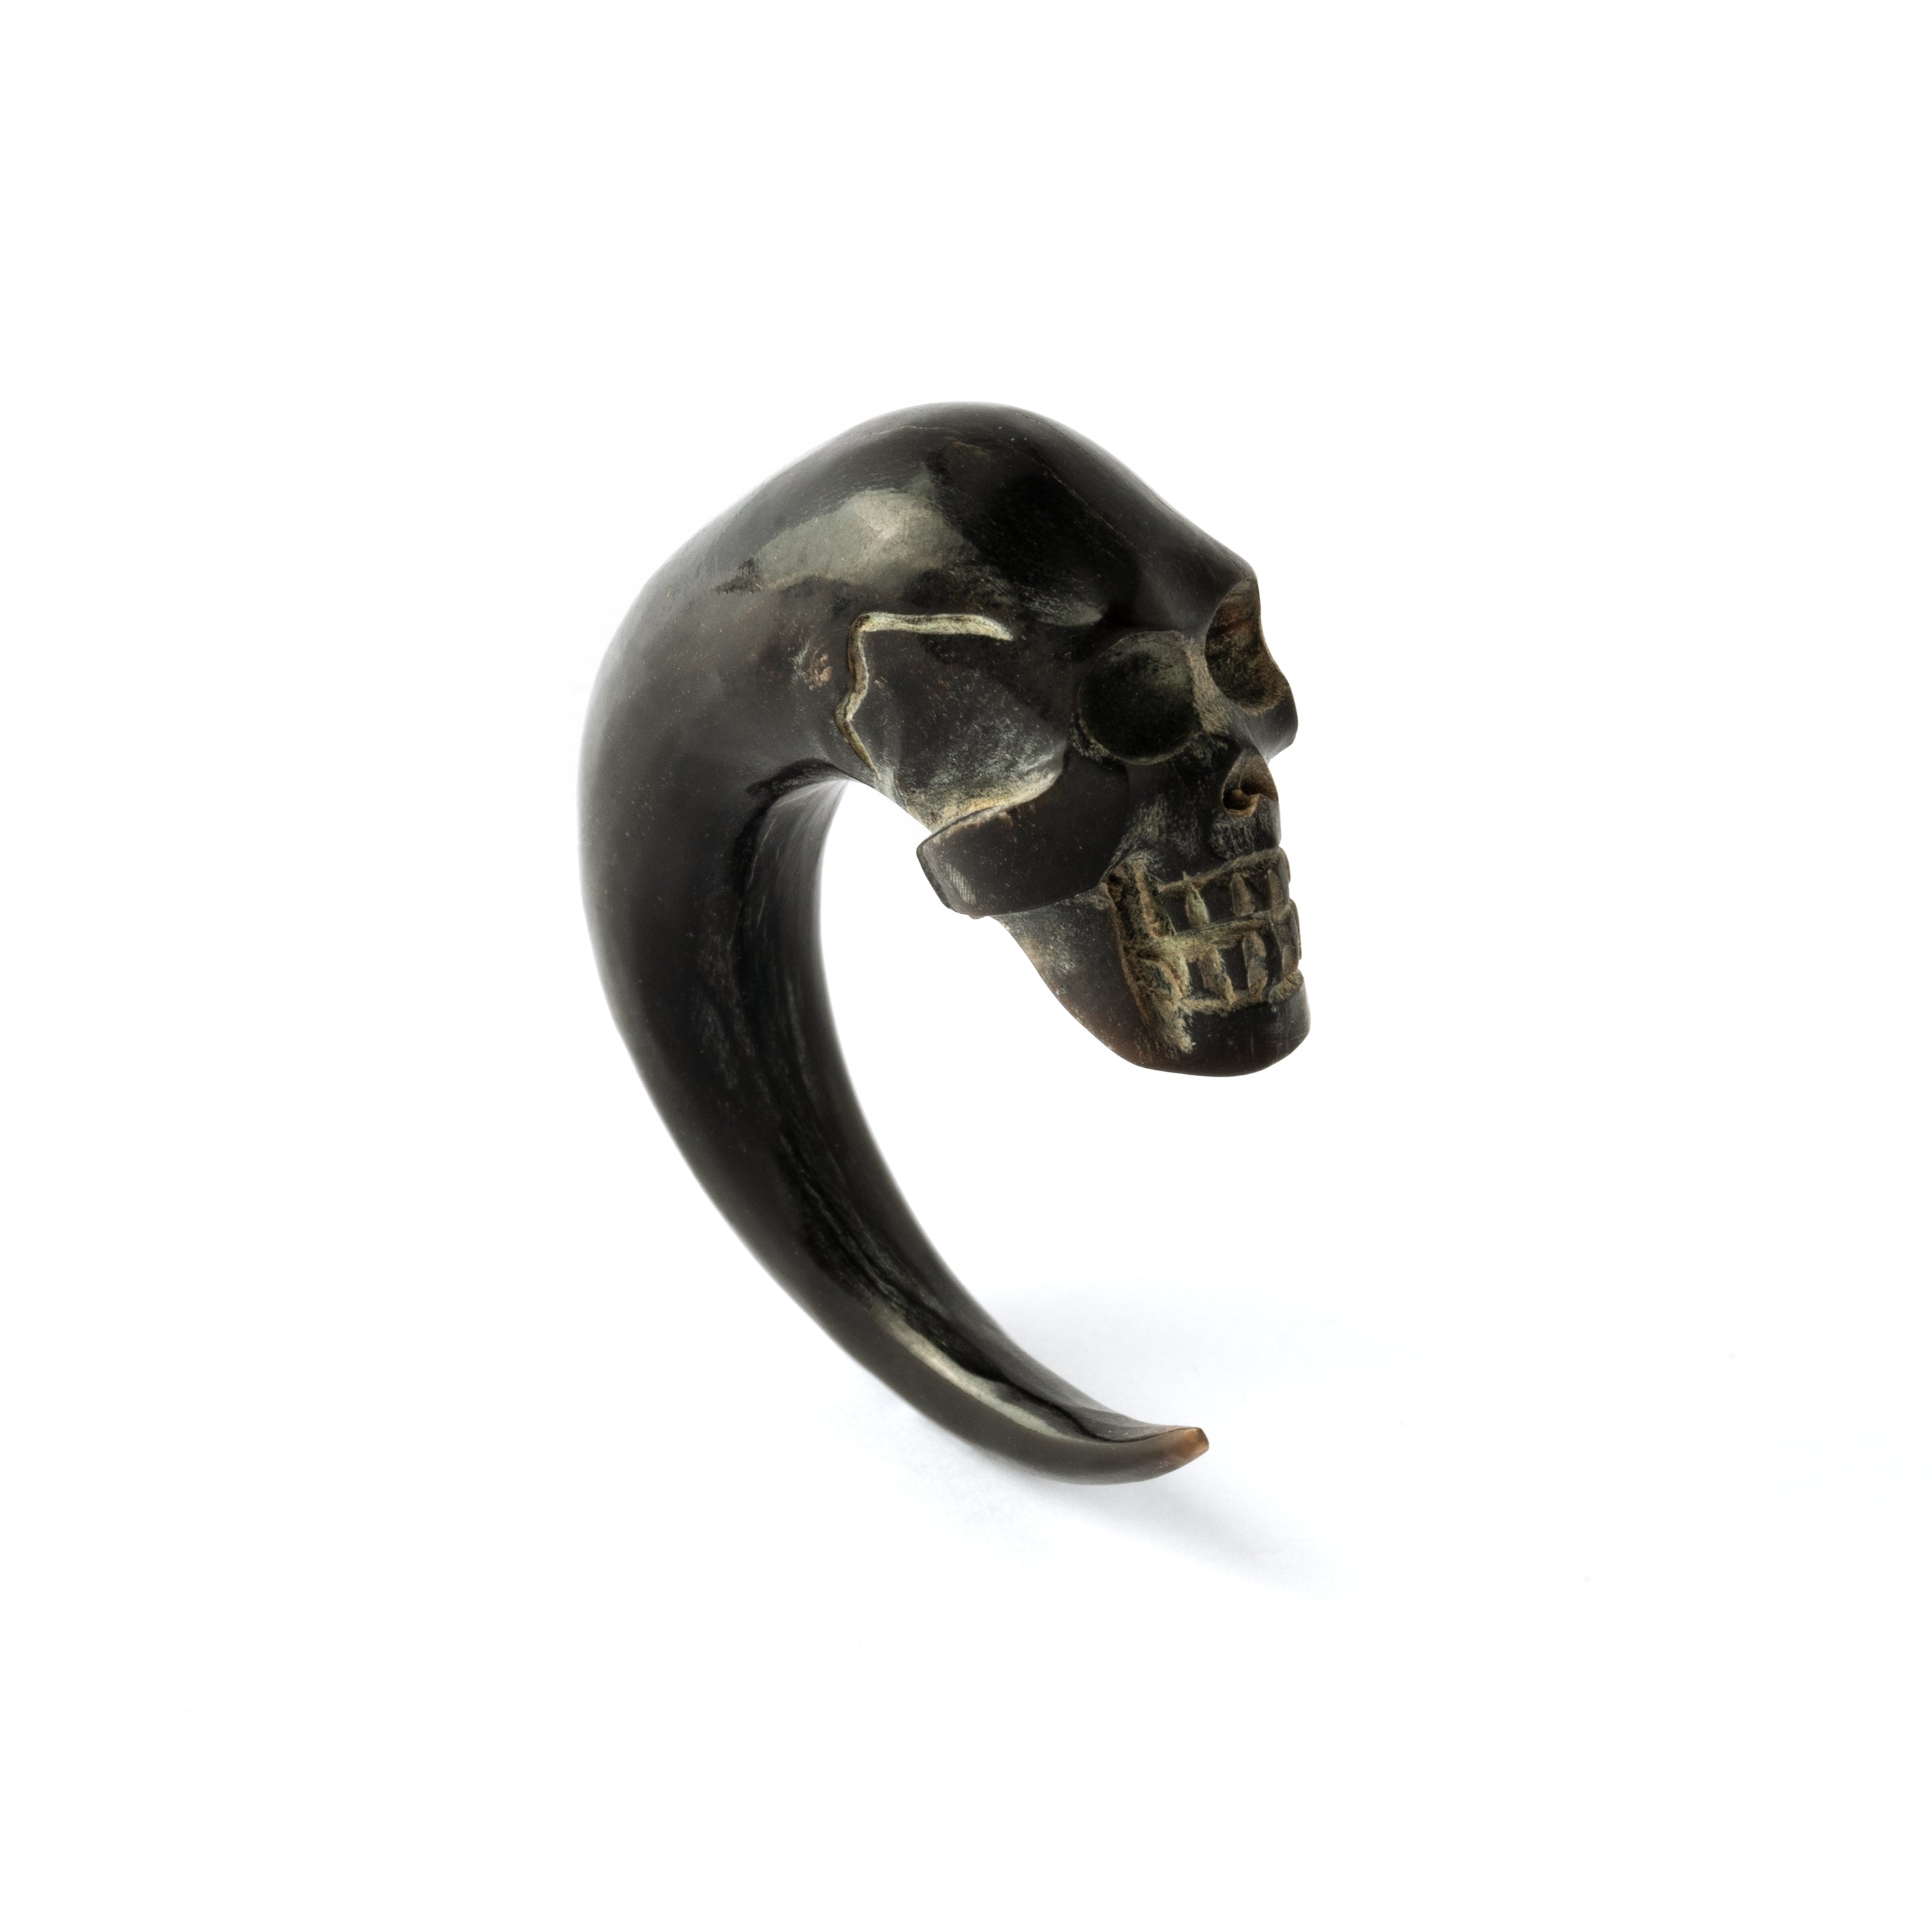 single horn skull hook ear stretcher right side view